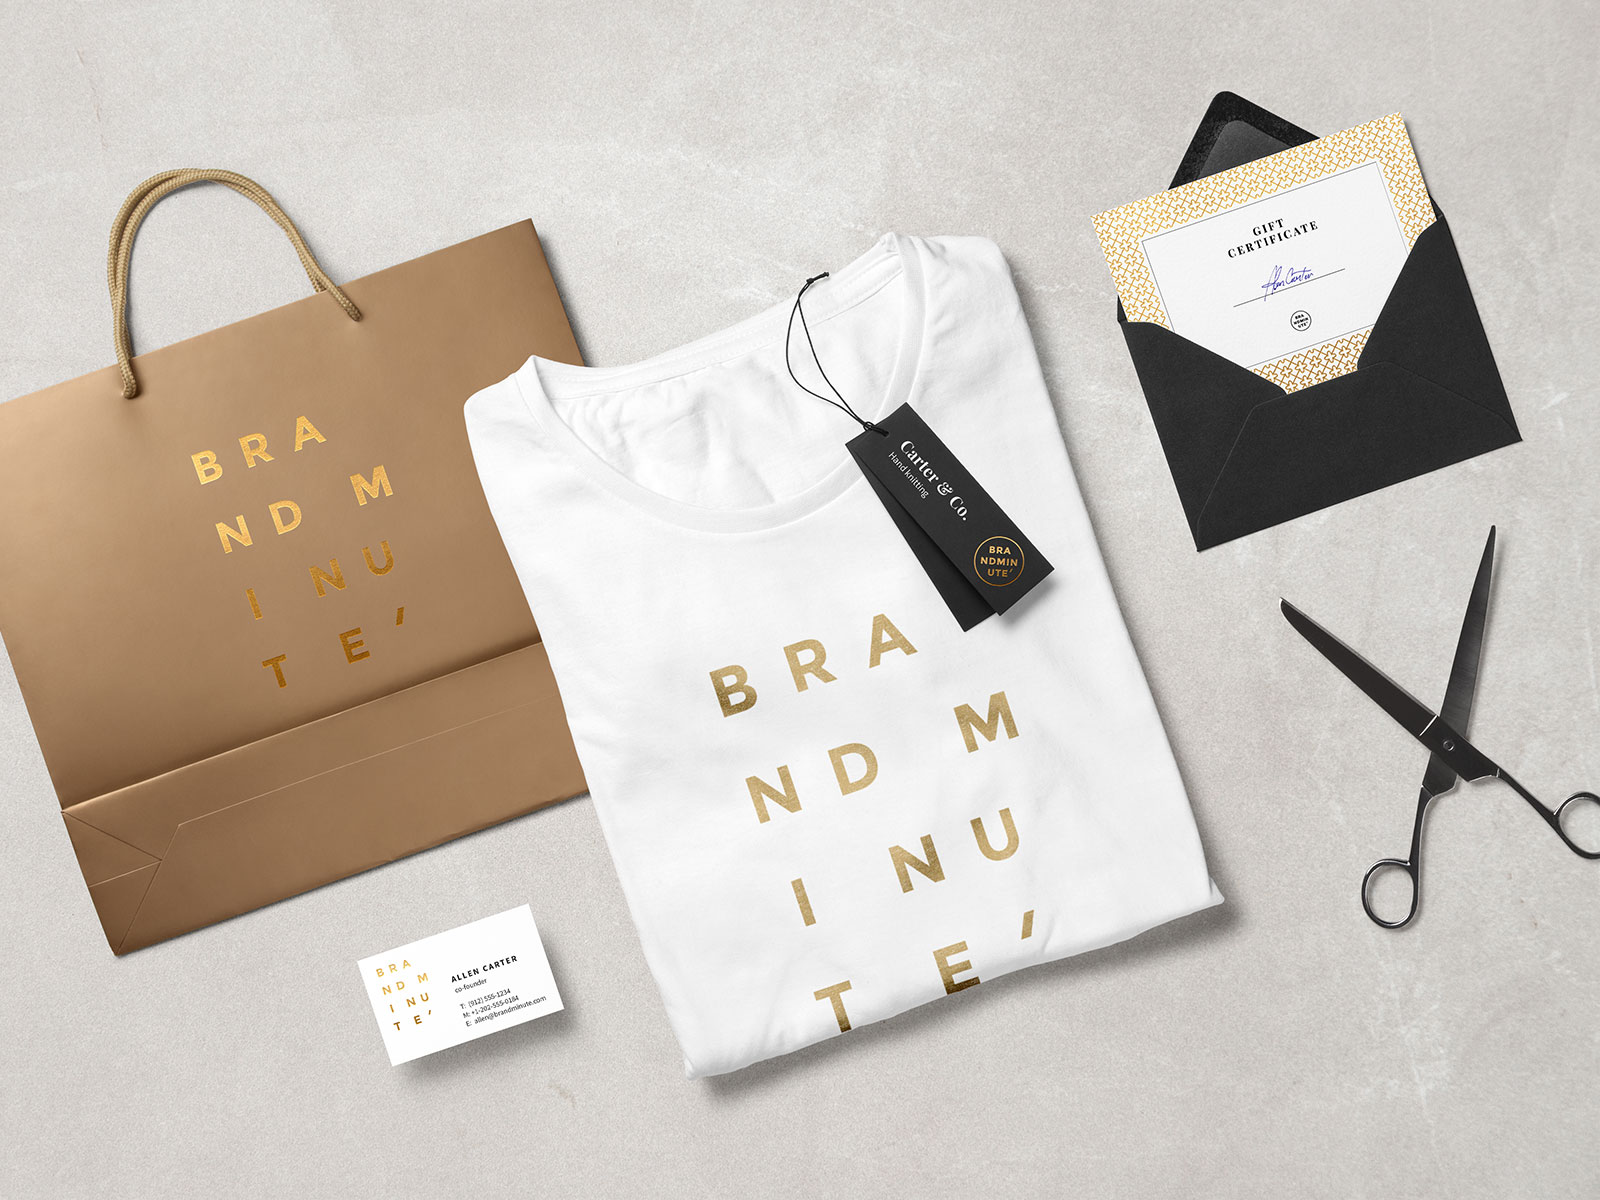 T-shirt, enveloppe, carte de visite et sac à provisions de marque de marque de marque